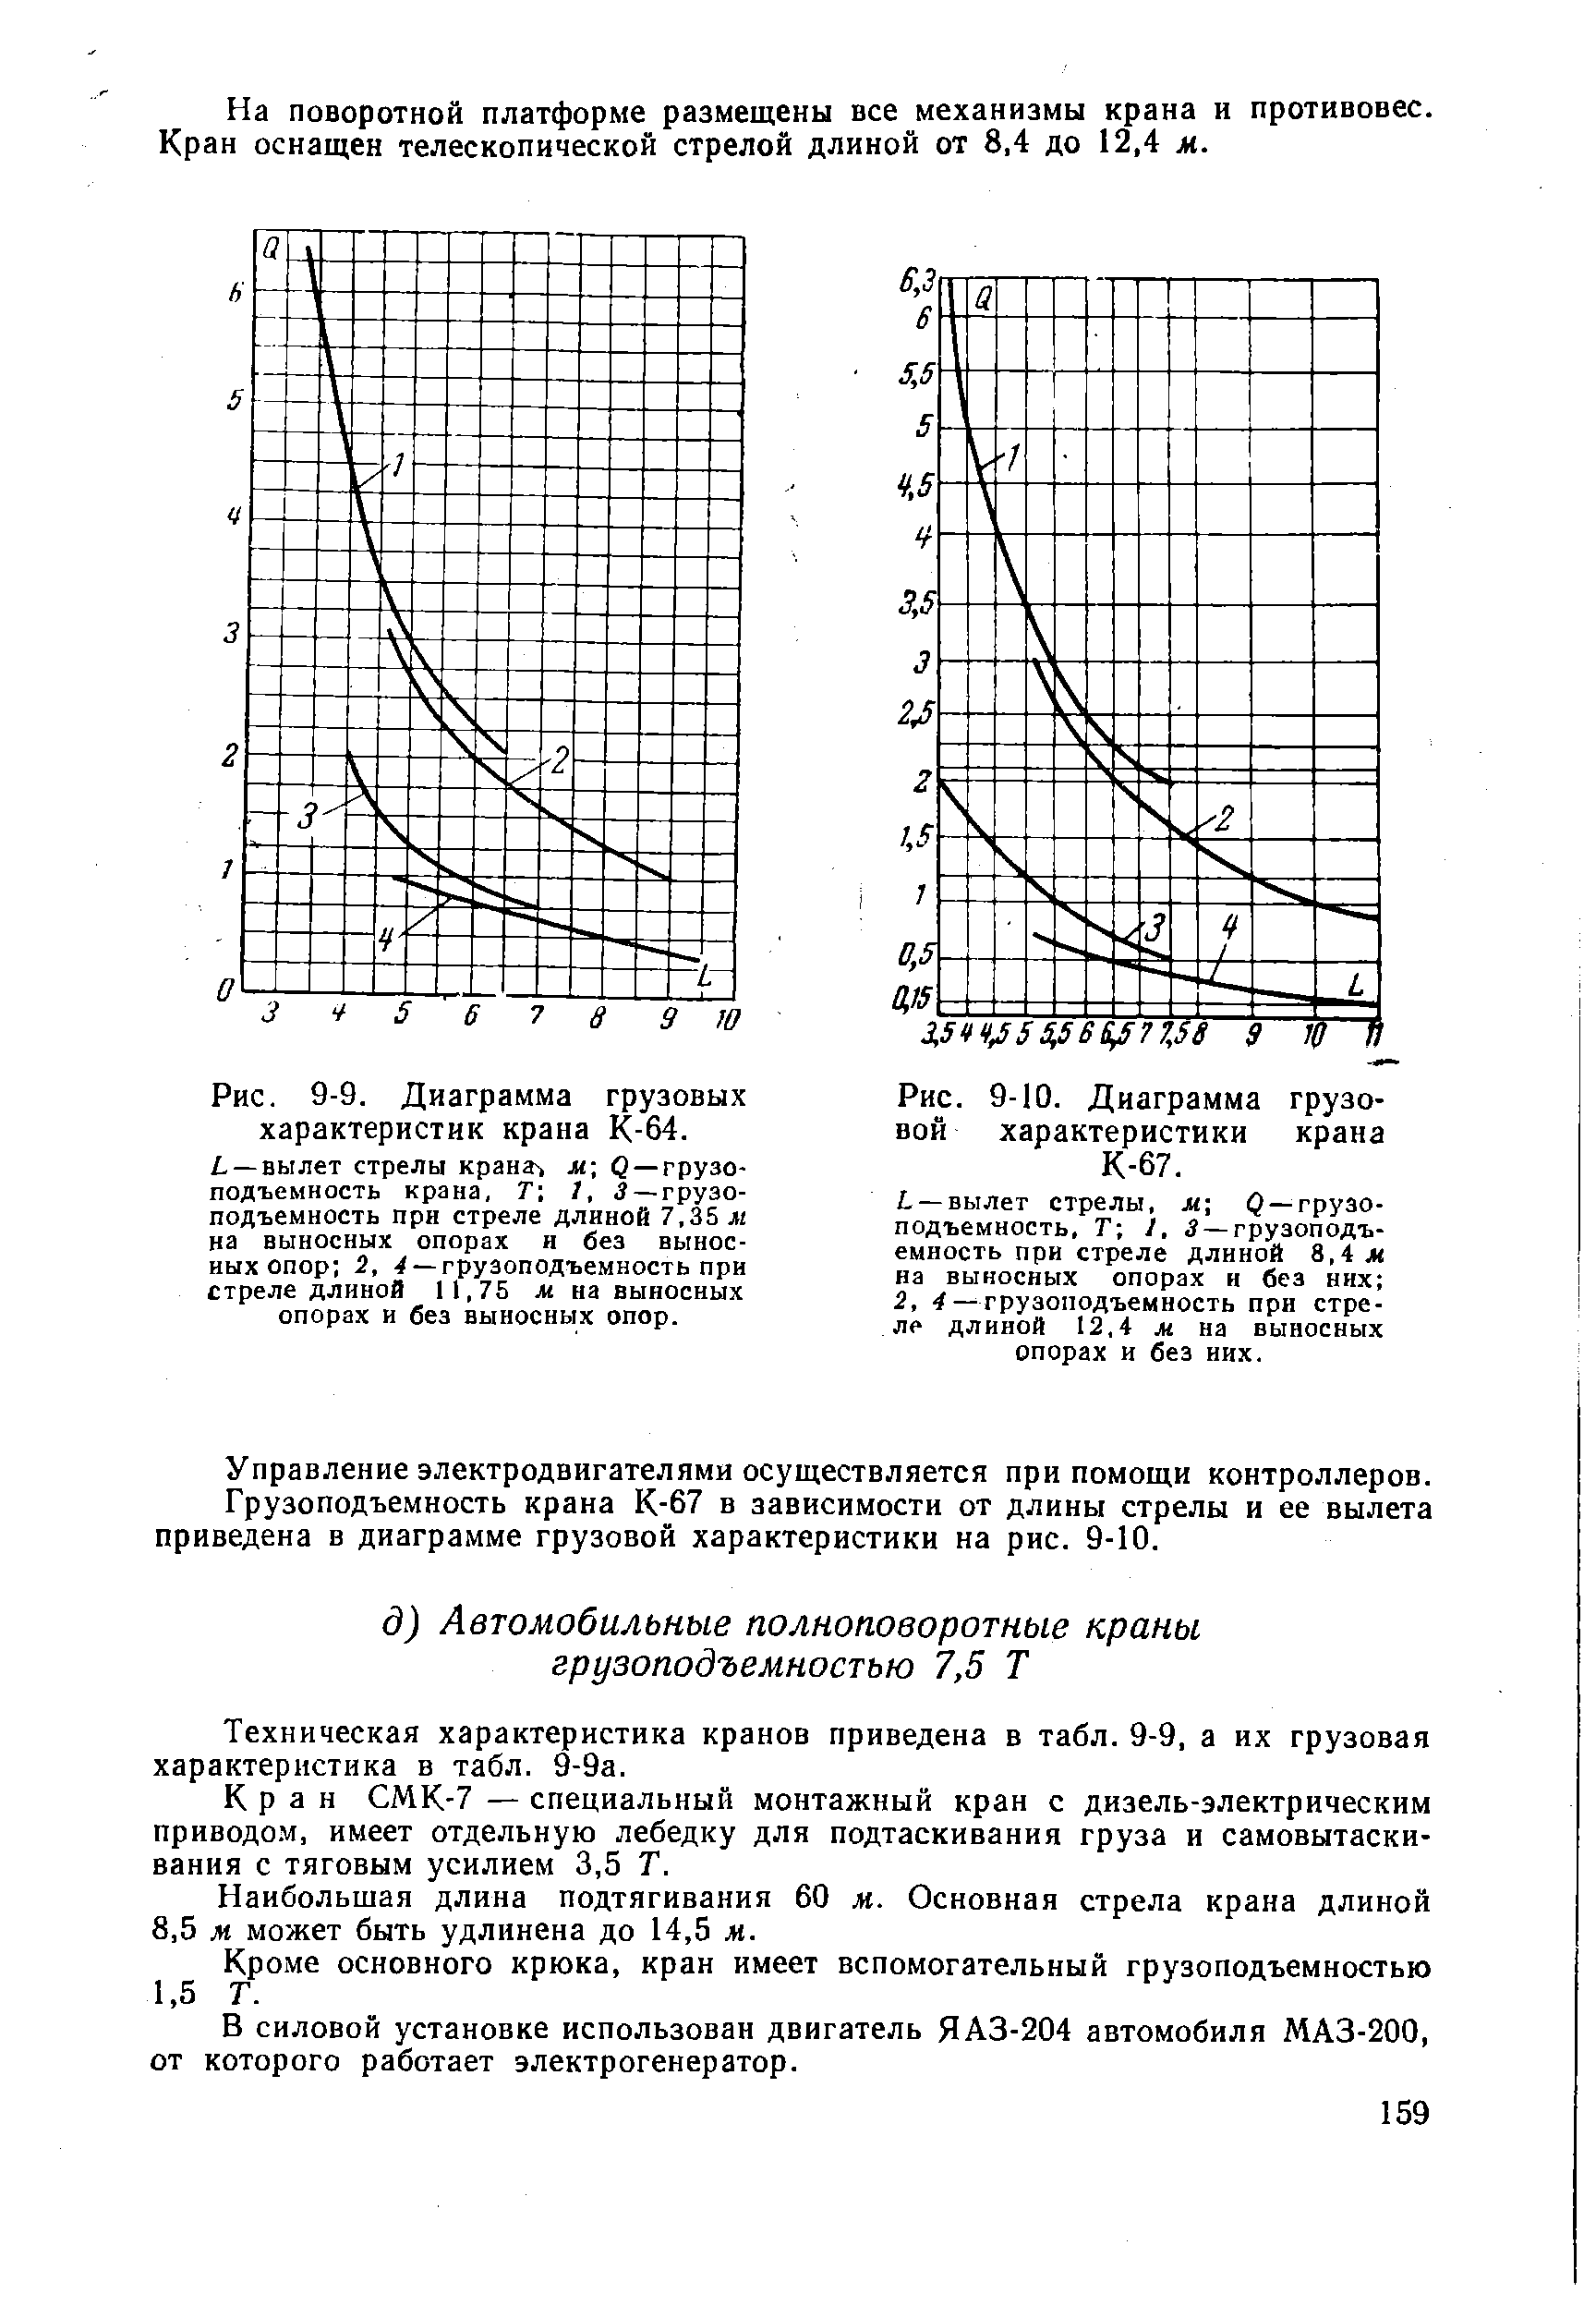 Рис. 9-10. Диаграмма <a href="/info/322212">грузовой характеристики</a> крана К-67.
